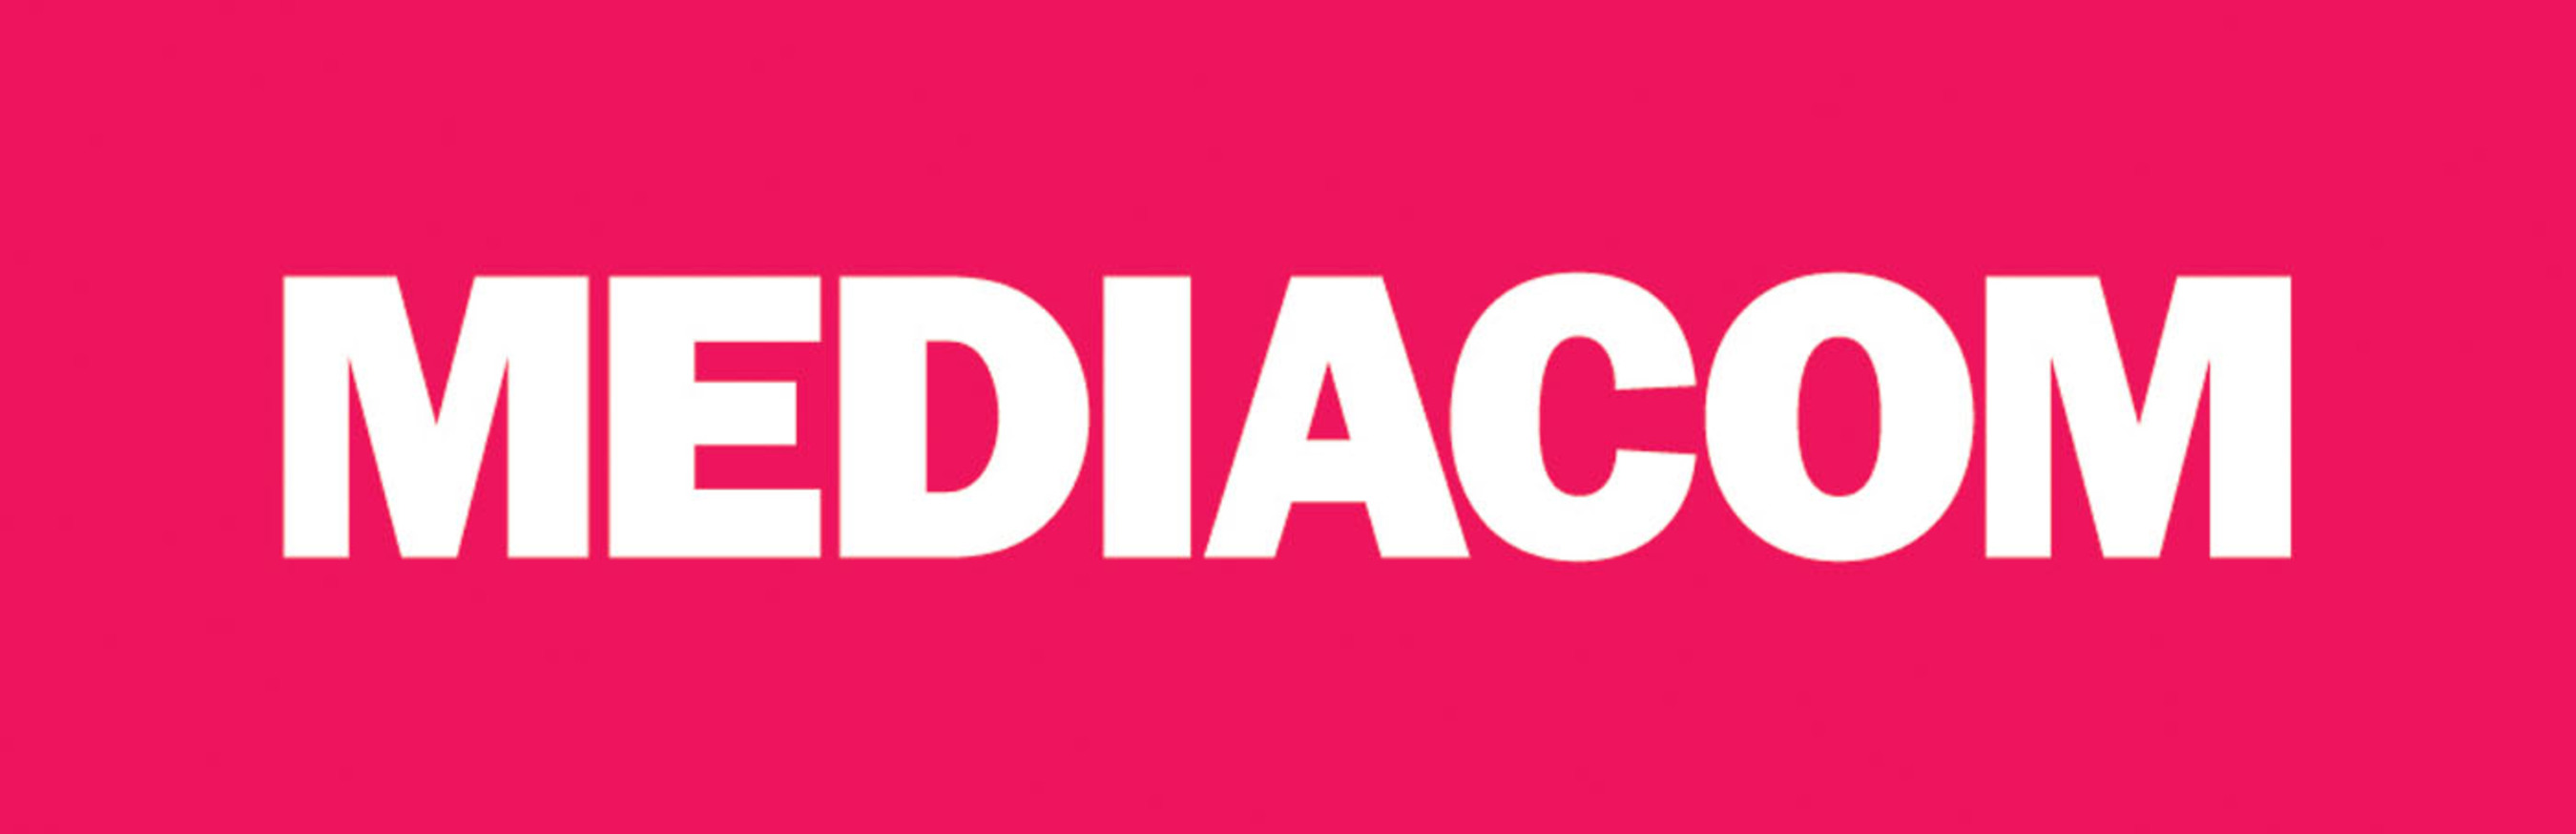 selects MediaCom as new global media agency